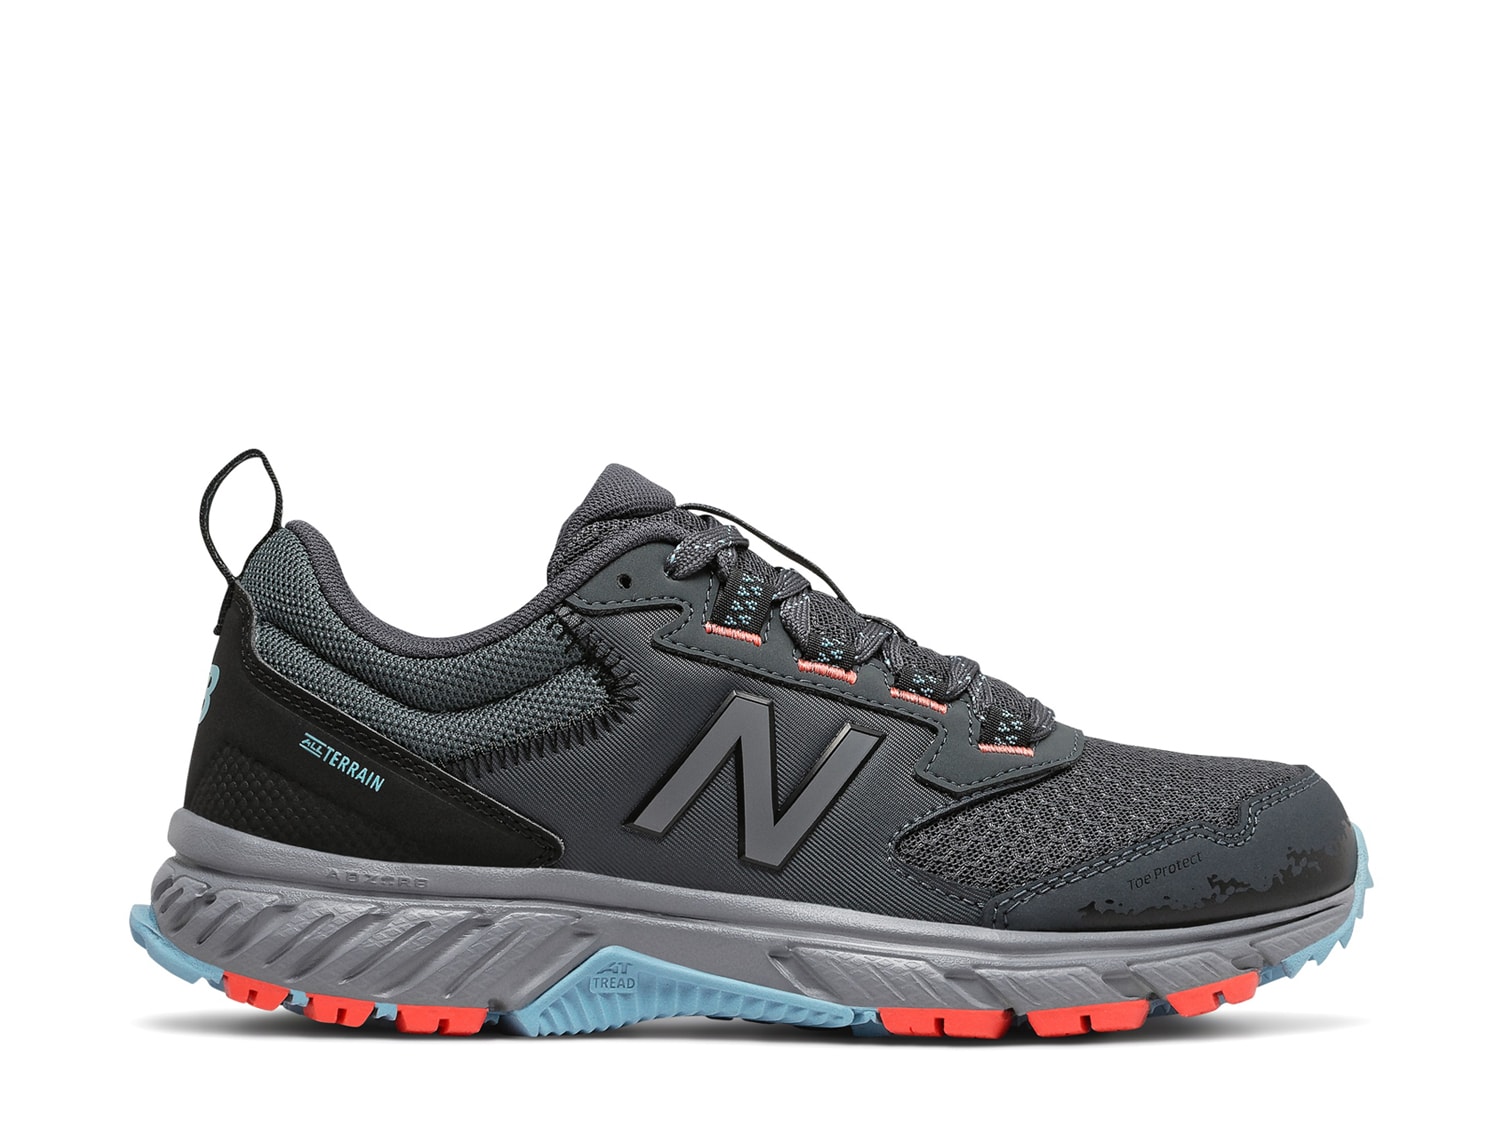 New Balance 510 v5 Trail Running Shoe - Women's - Free Shipping | DSW